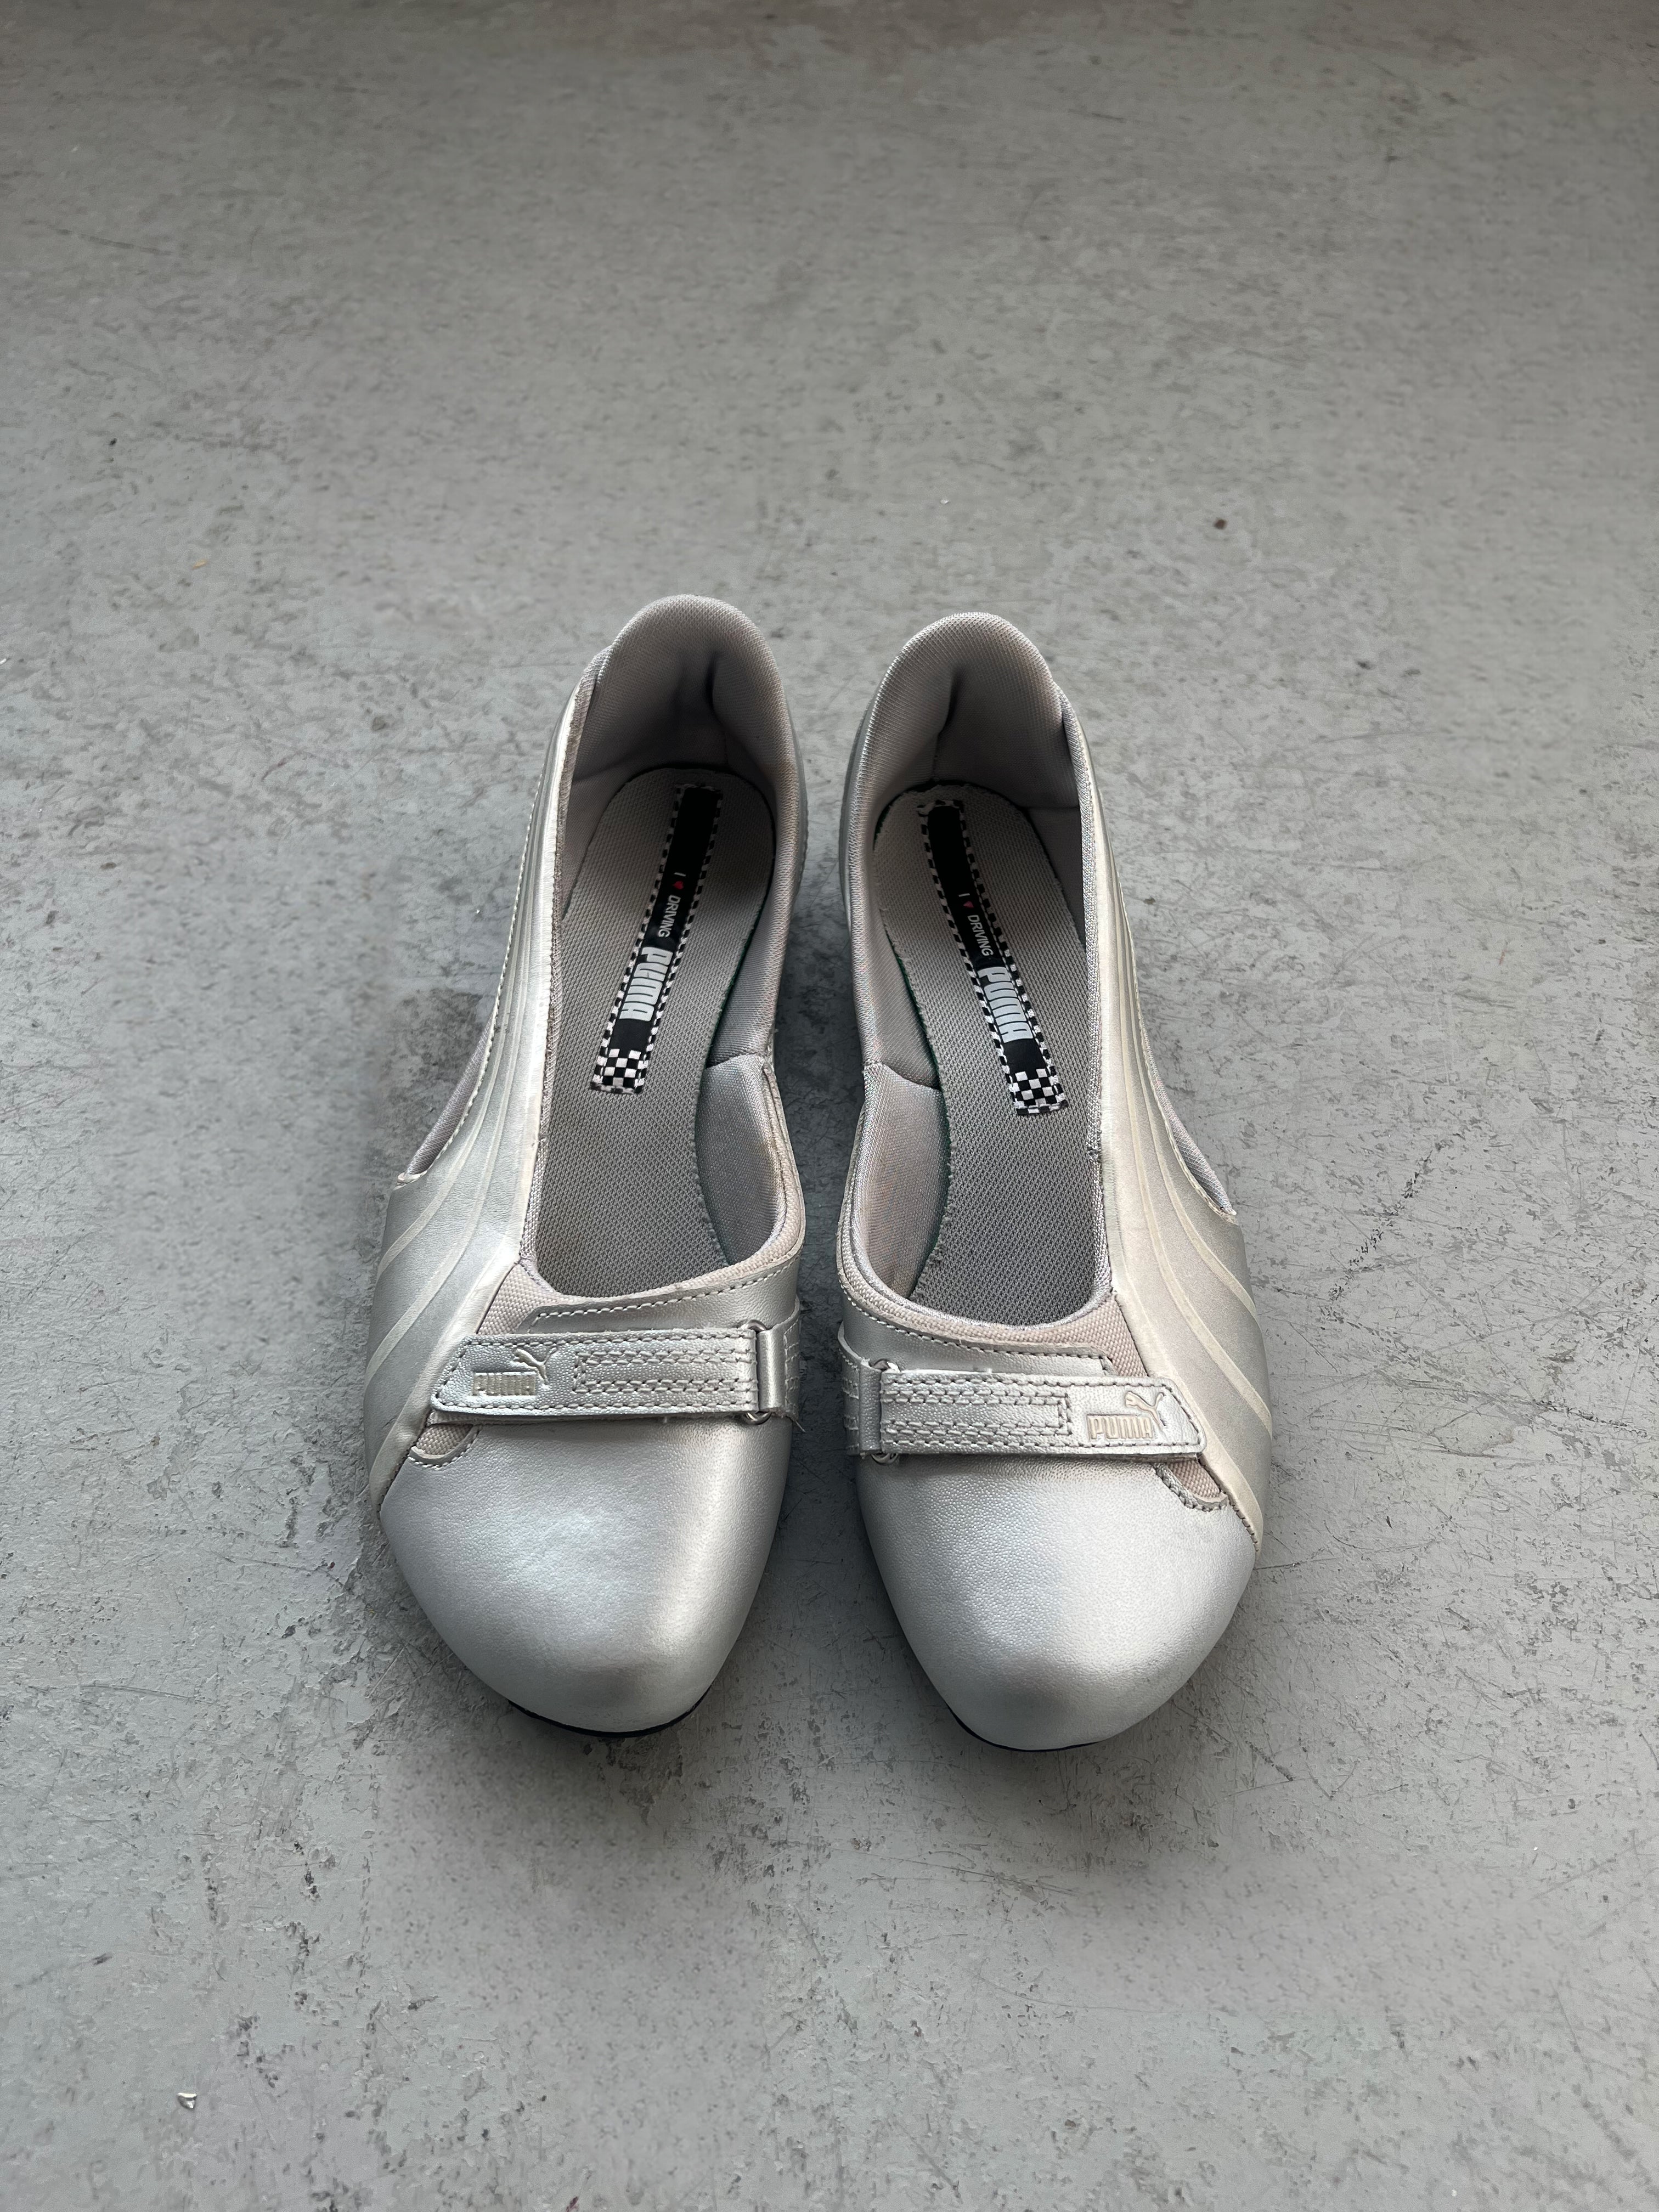 Silver Puma Ballet Flats Size 8/8.5